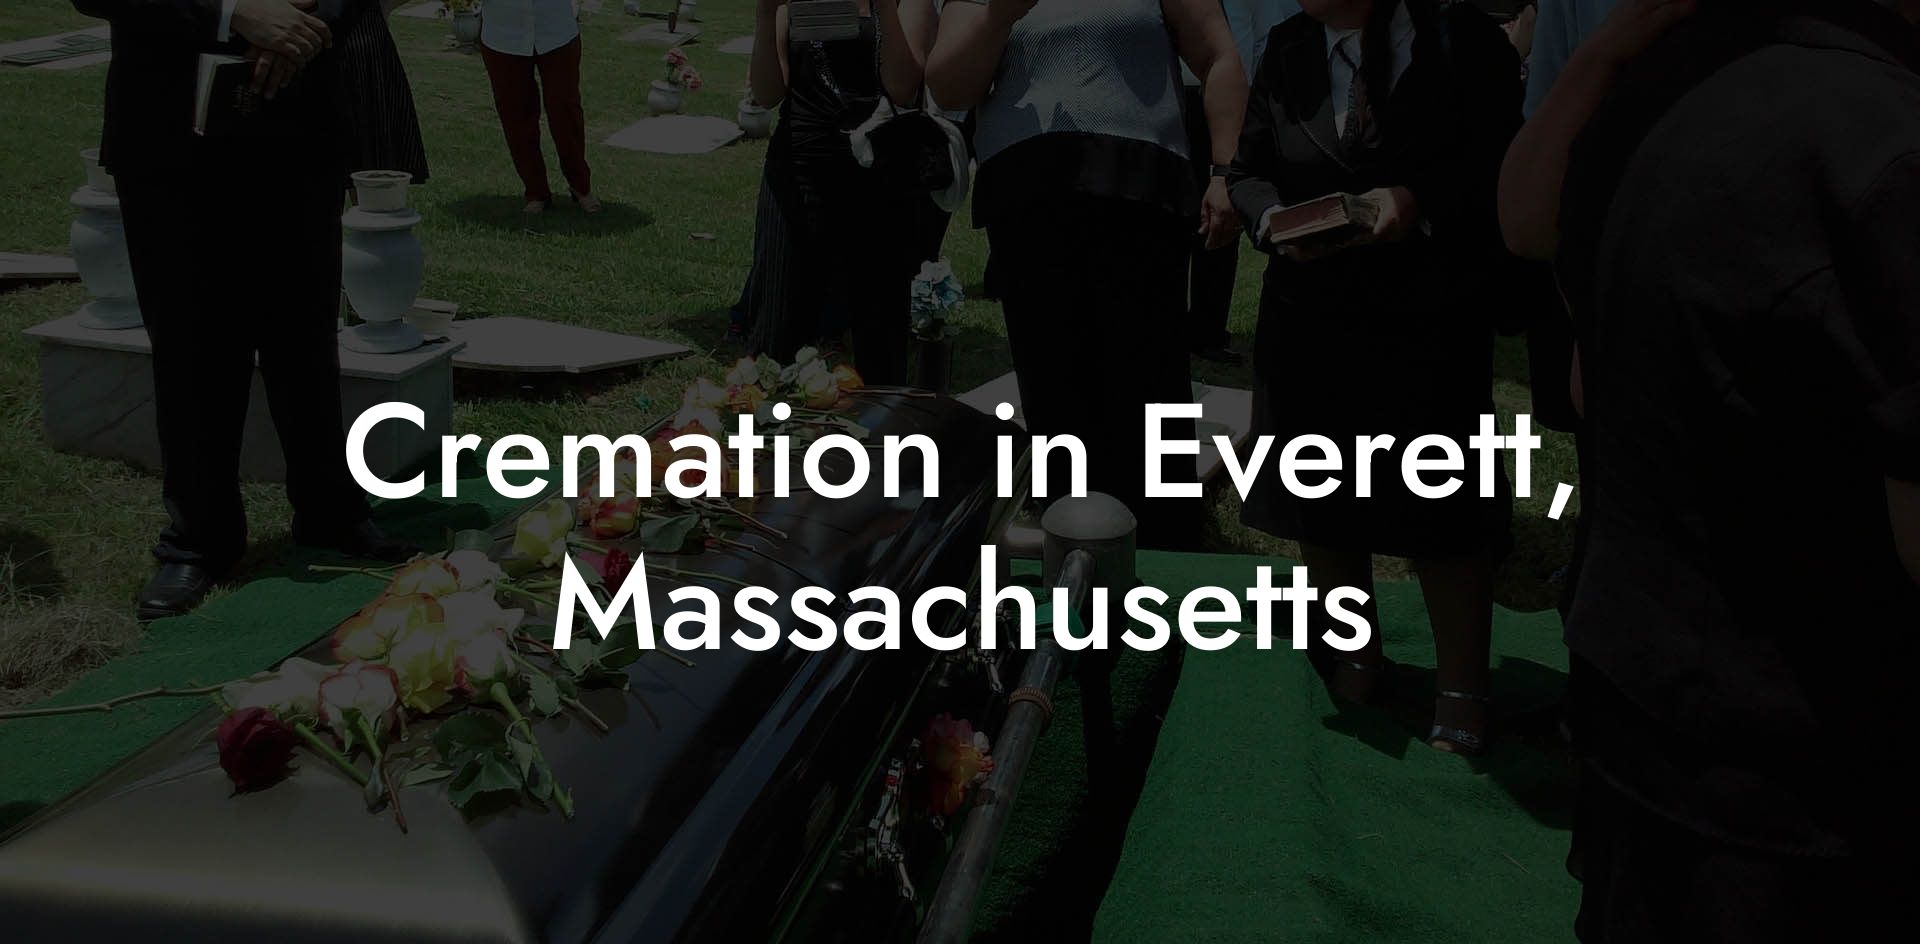 Cremation in Everett, Massachusetts